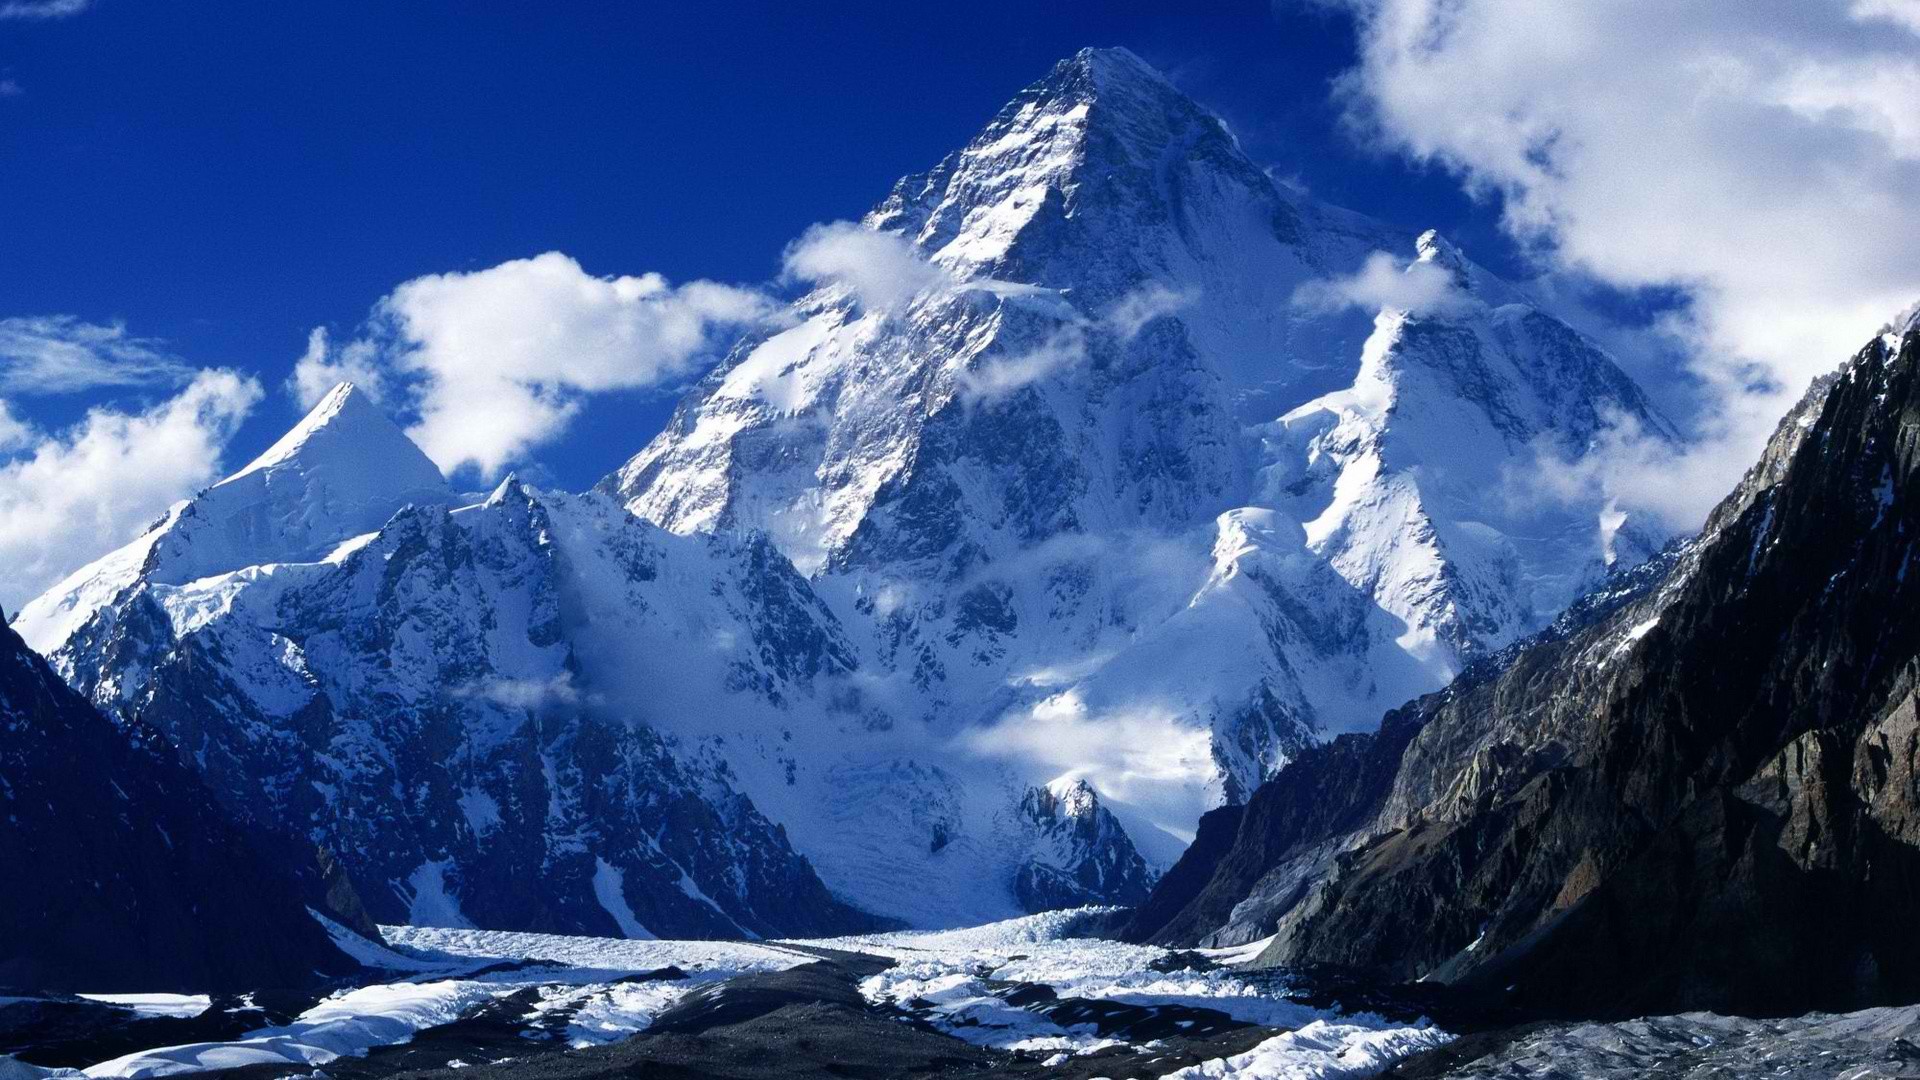 Mountains of Pakistan ideas. mountains, pakistan, natural landmarks